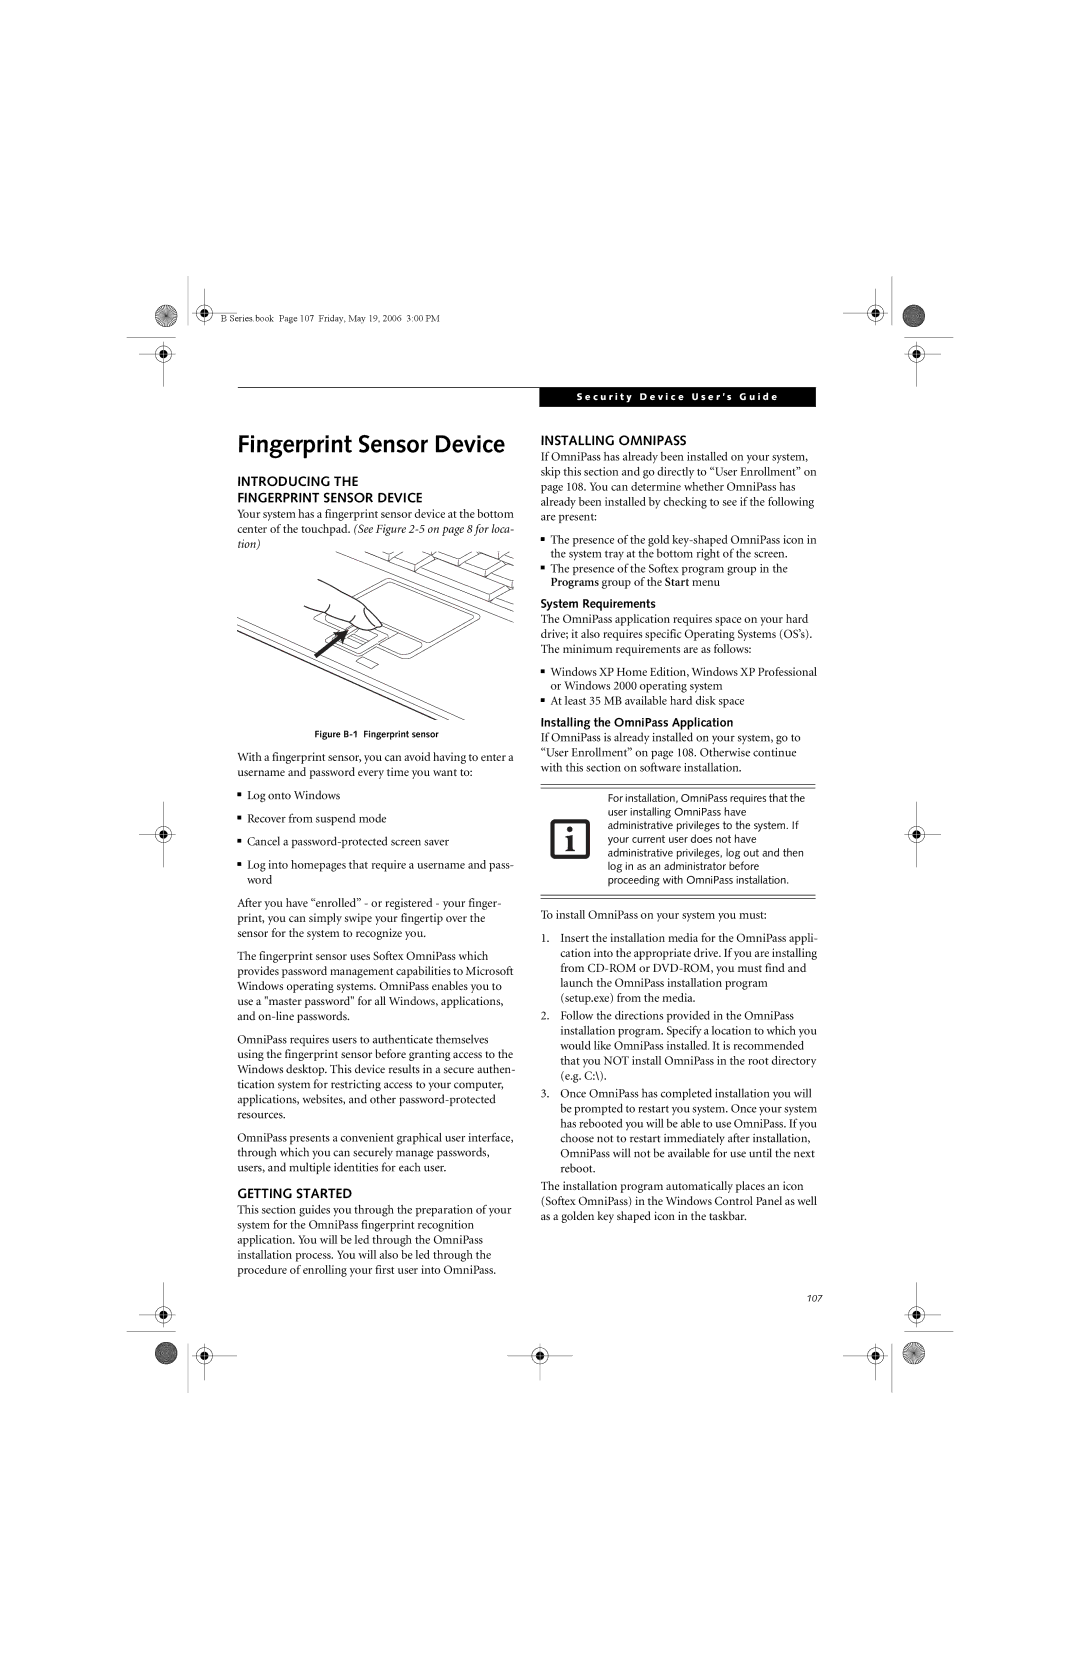 Fujitsu Siemens Computers B6210 manual Introducing Fingerprint Sensor Device, Getting Started, Installing Omnipass 